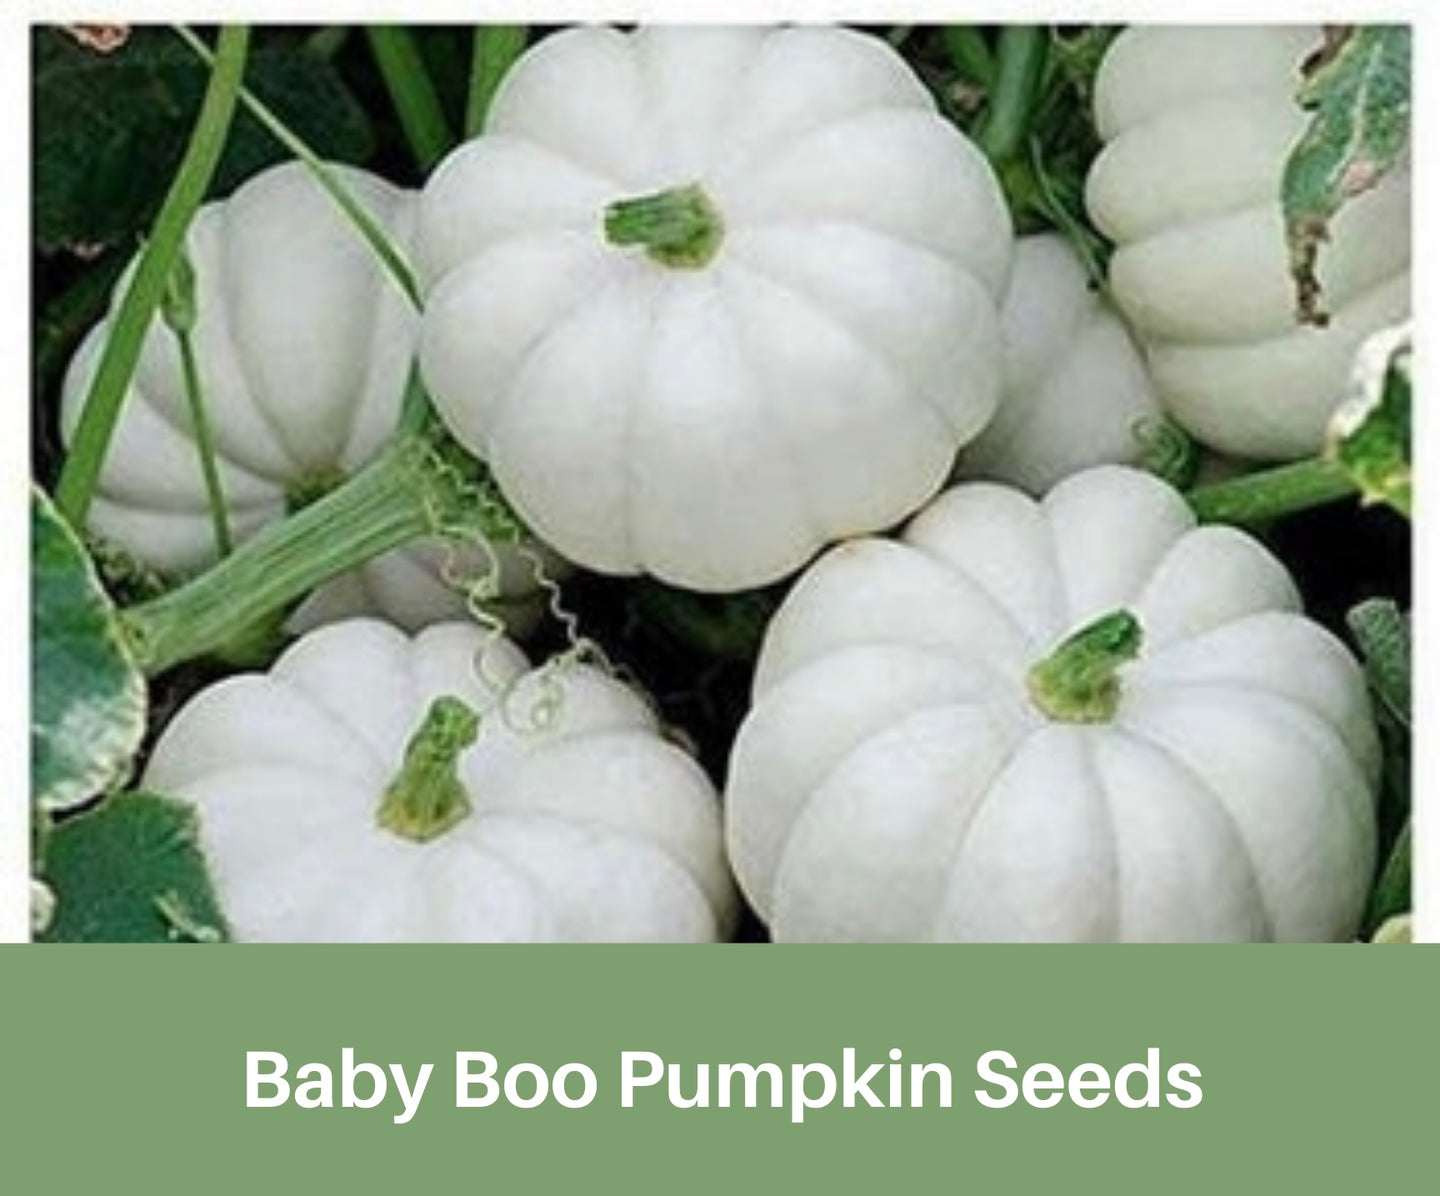 Baby Boo Pumpkin Seeds, Heirloom